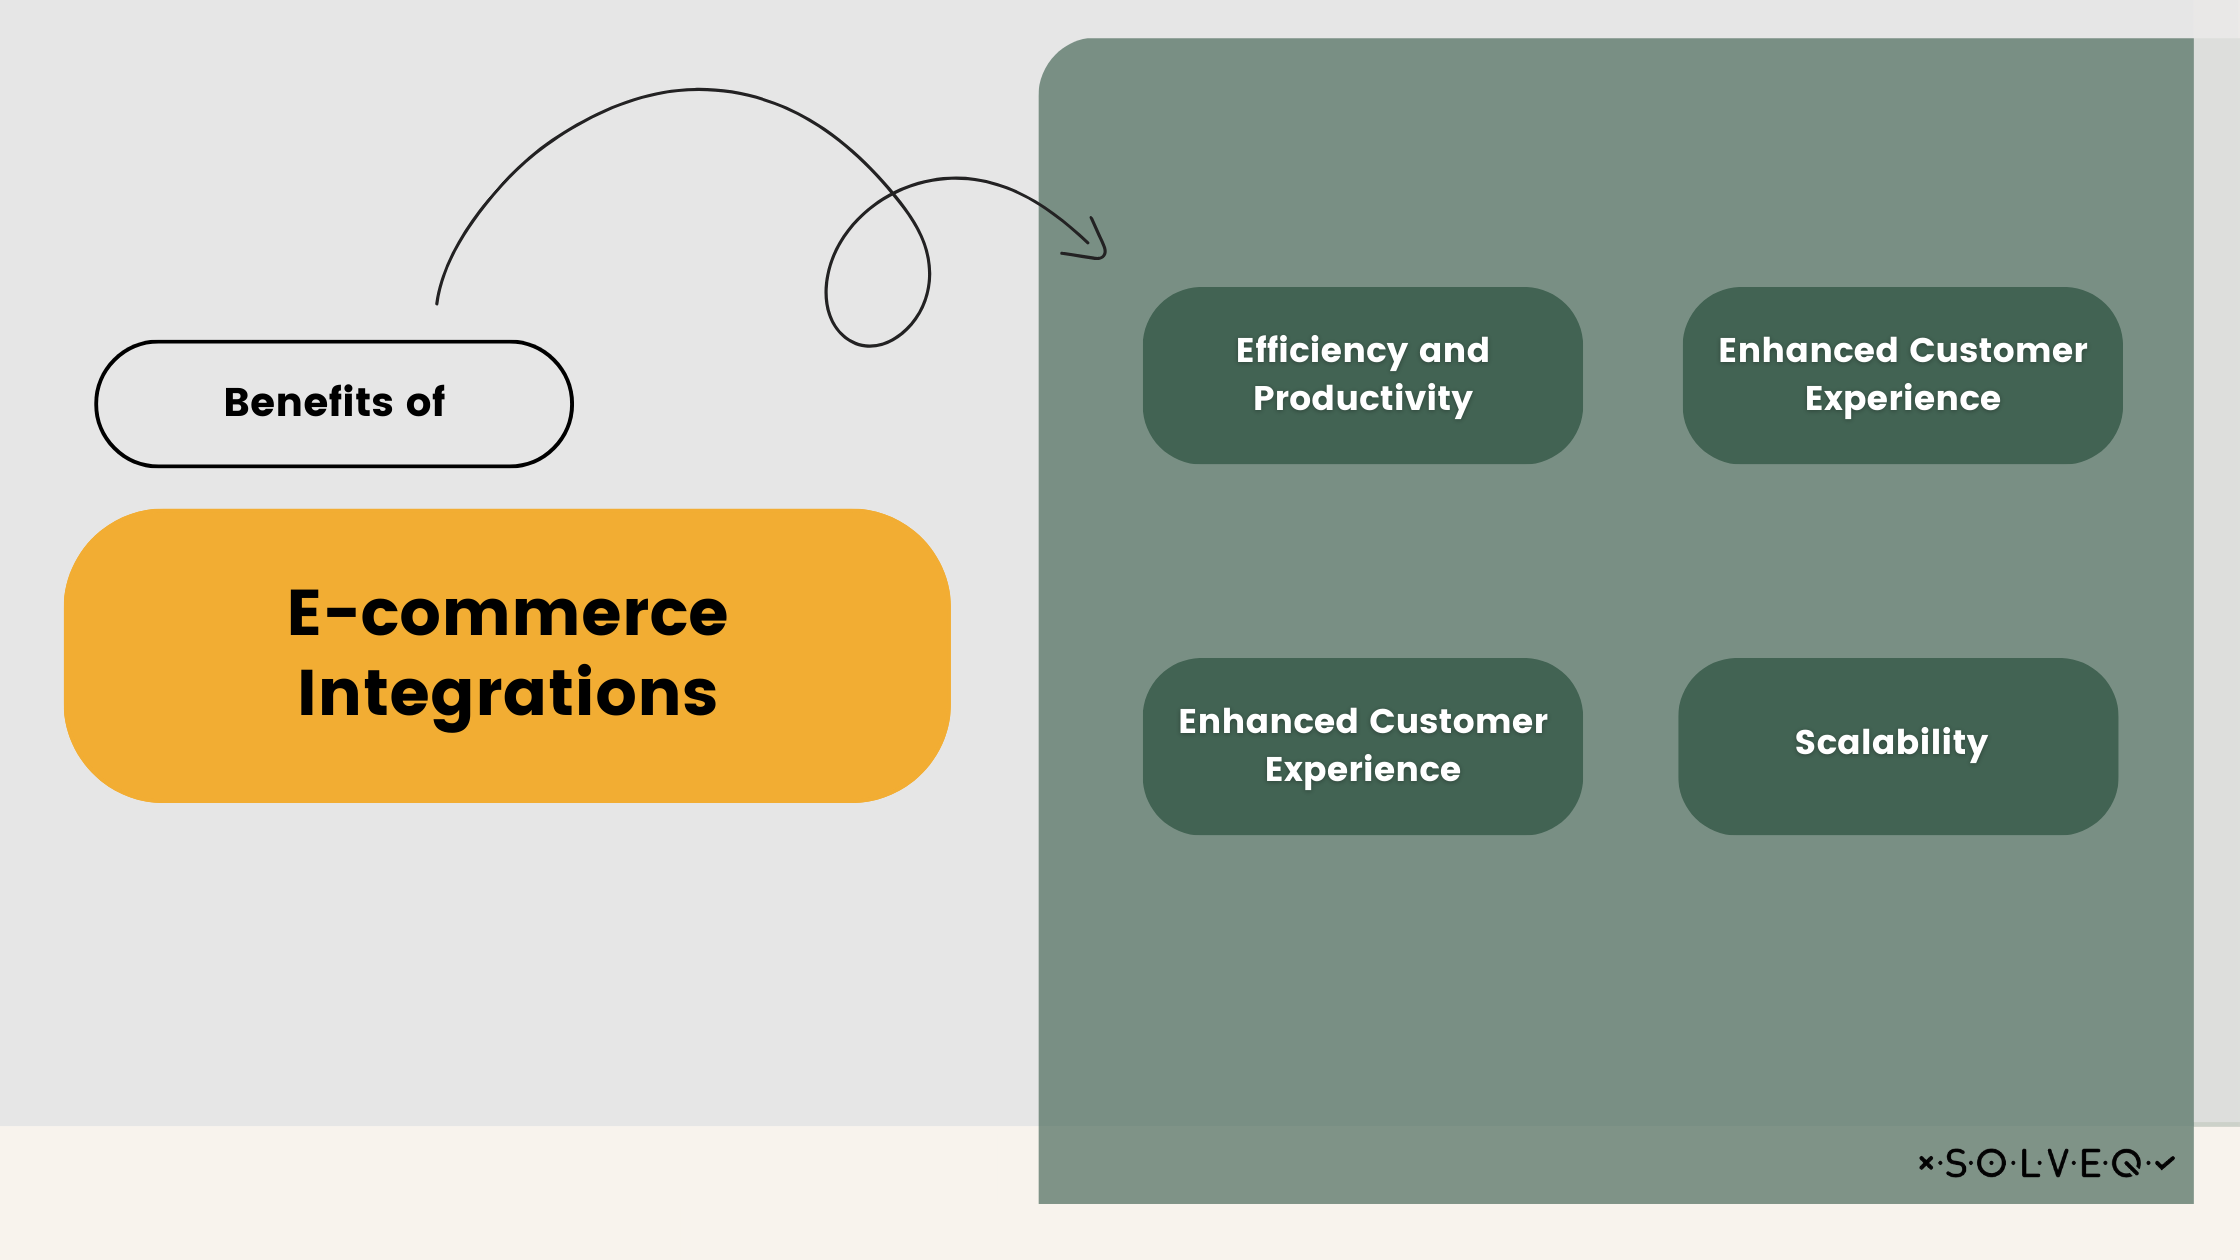 Benefits of eCommerce